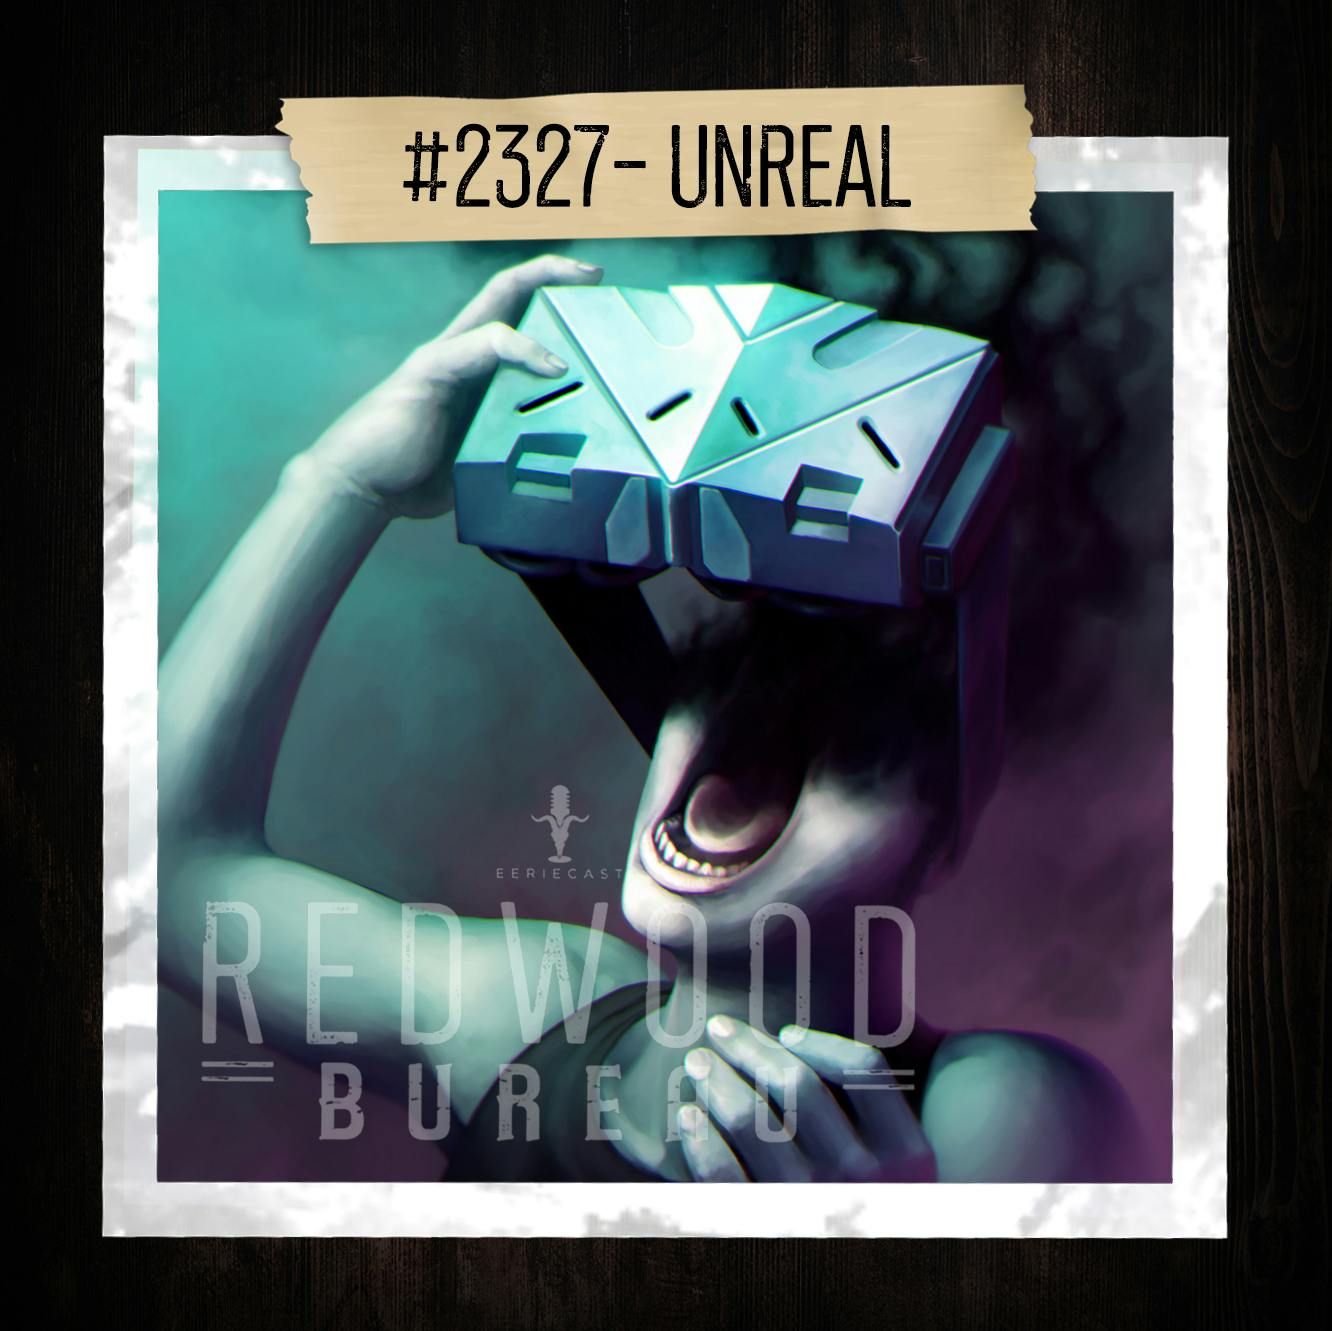 "UNREAL" - Redwood Bureau Phenomenon #2327